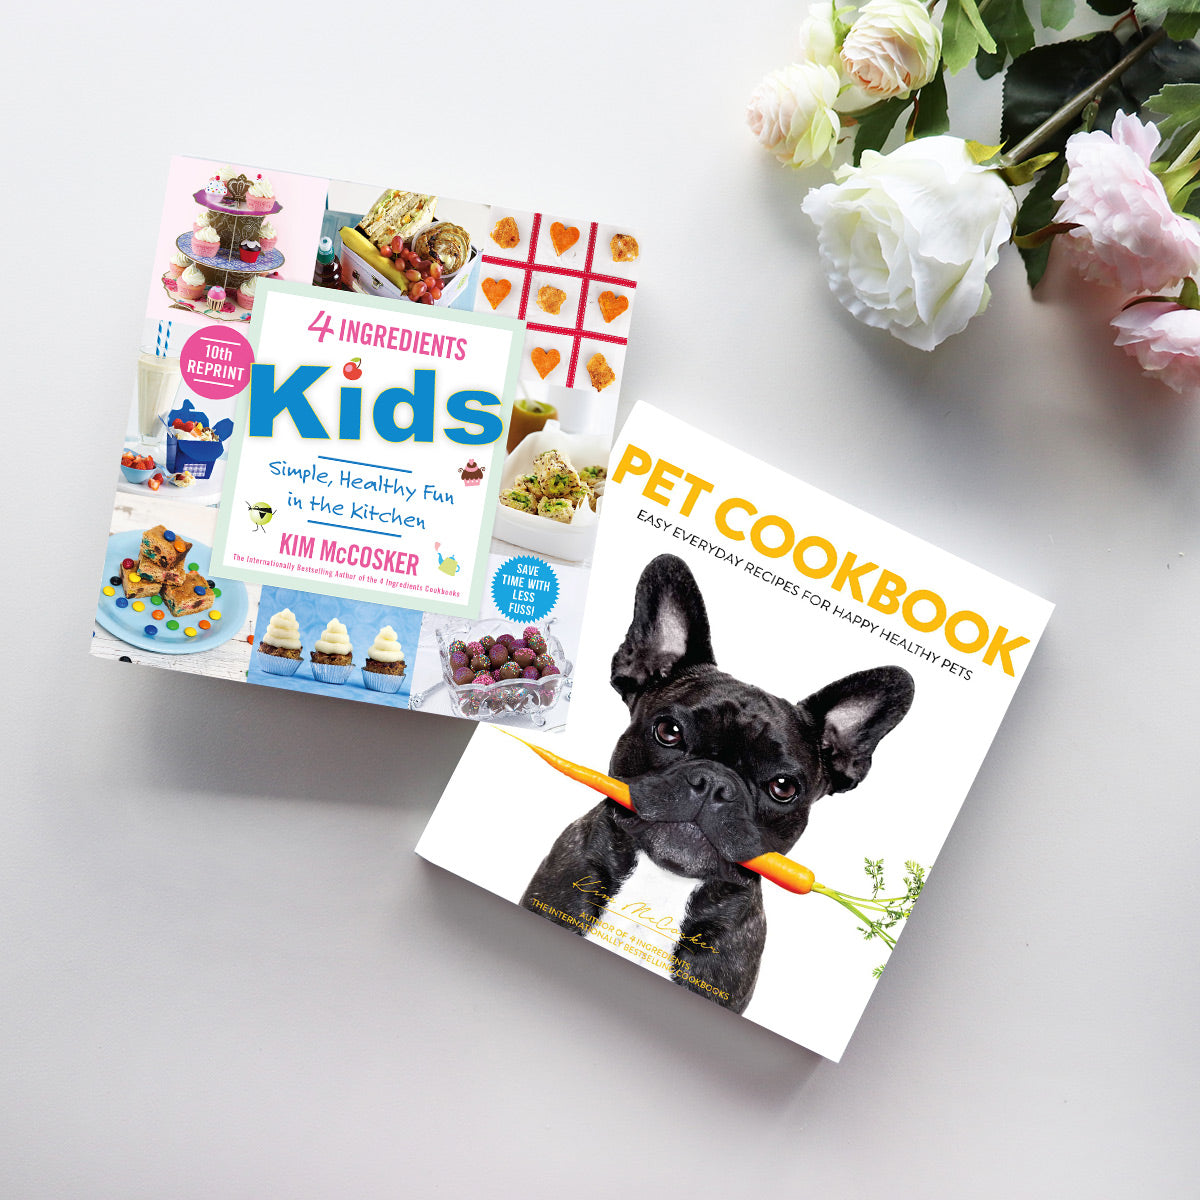 4 Ingredients Kids &amp; Pet Cookbook